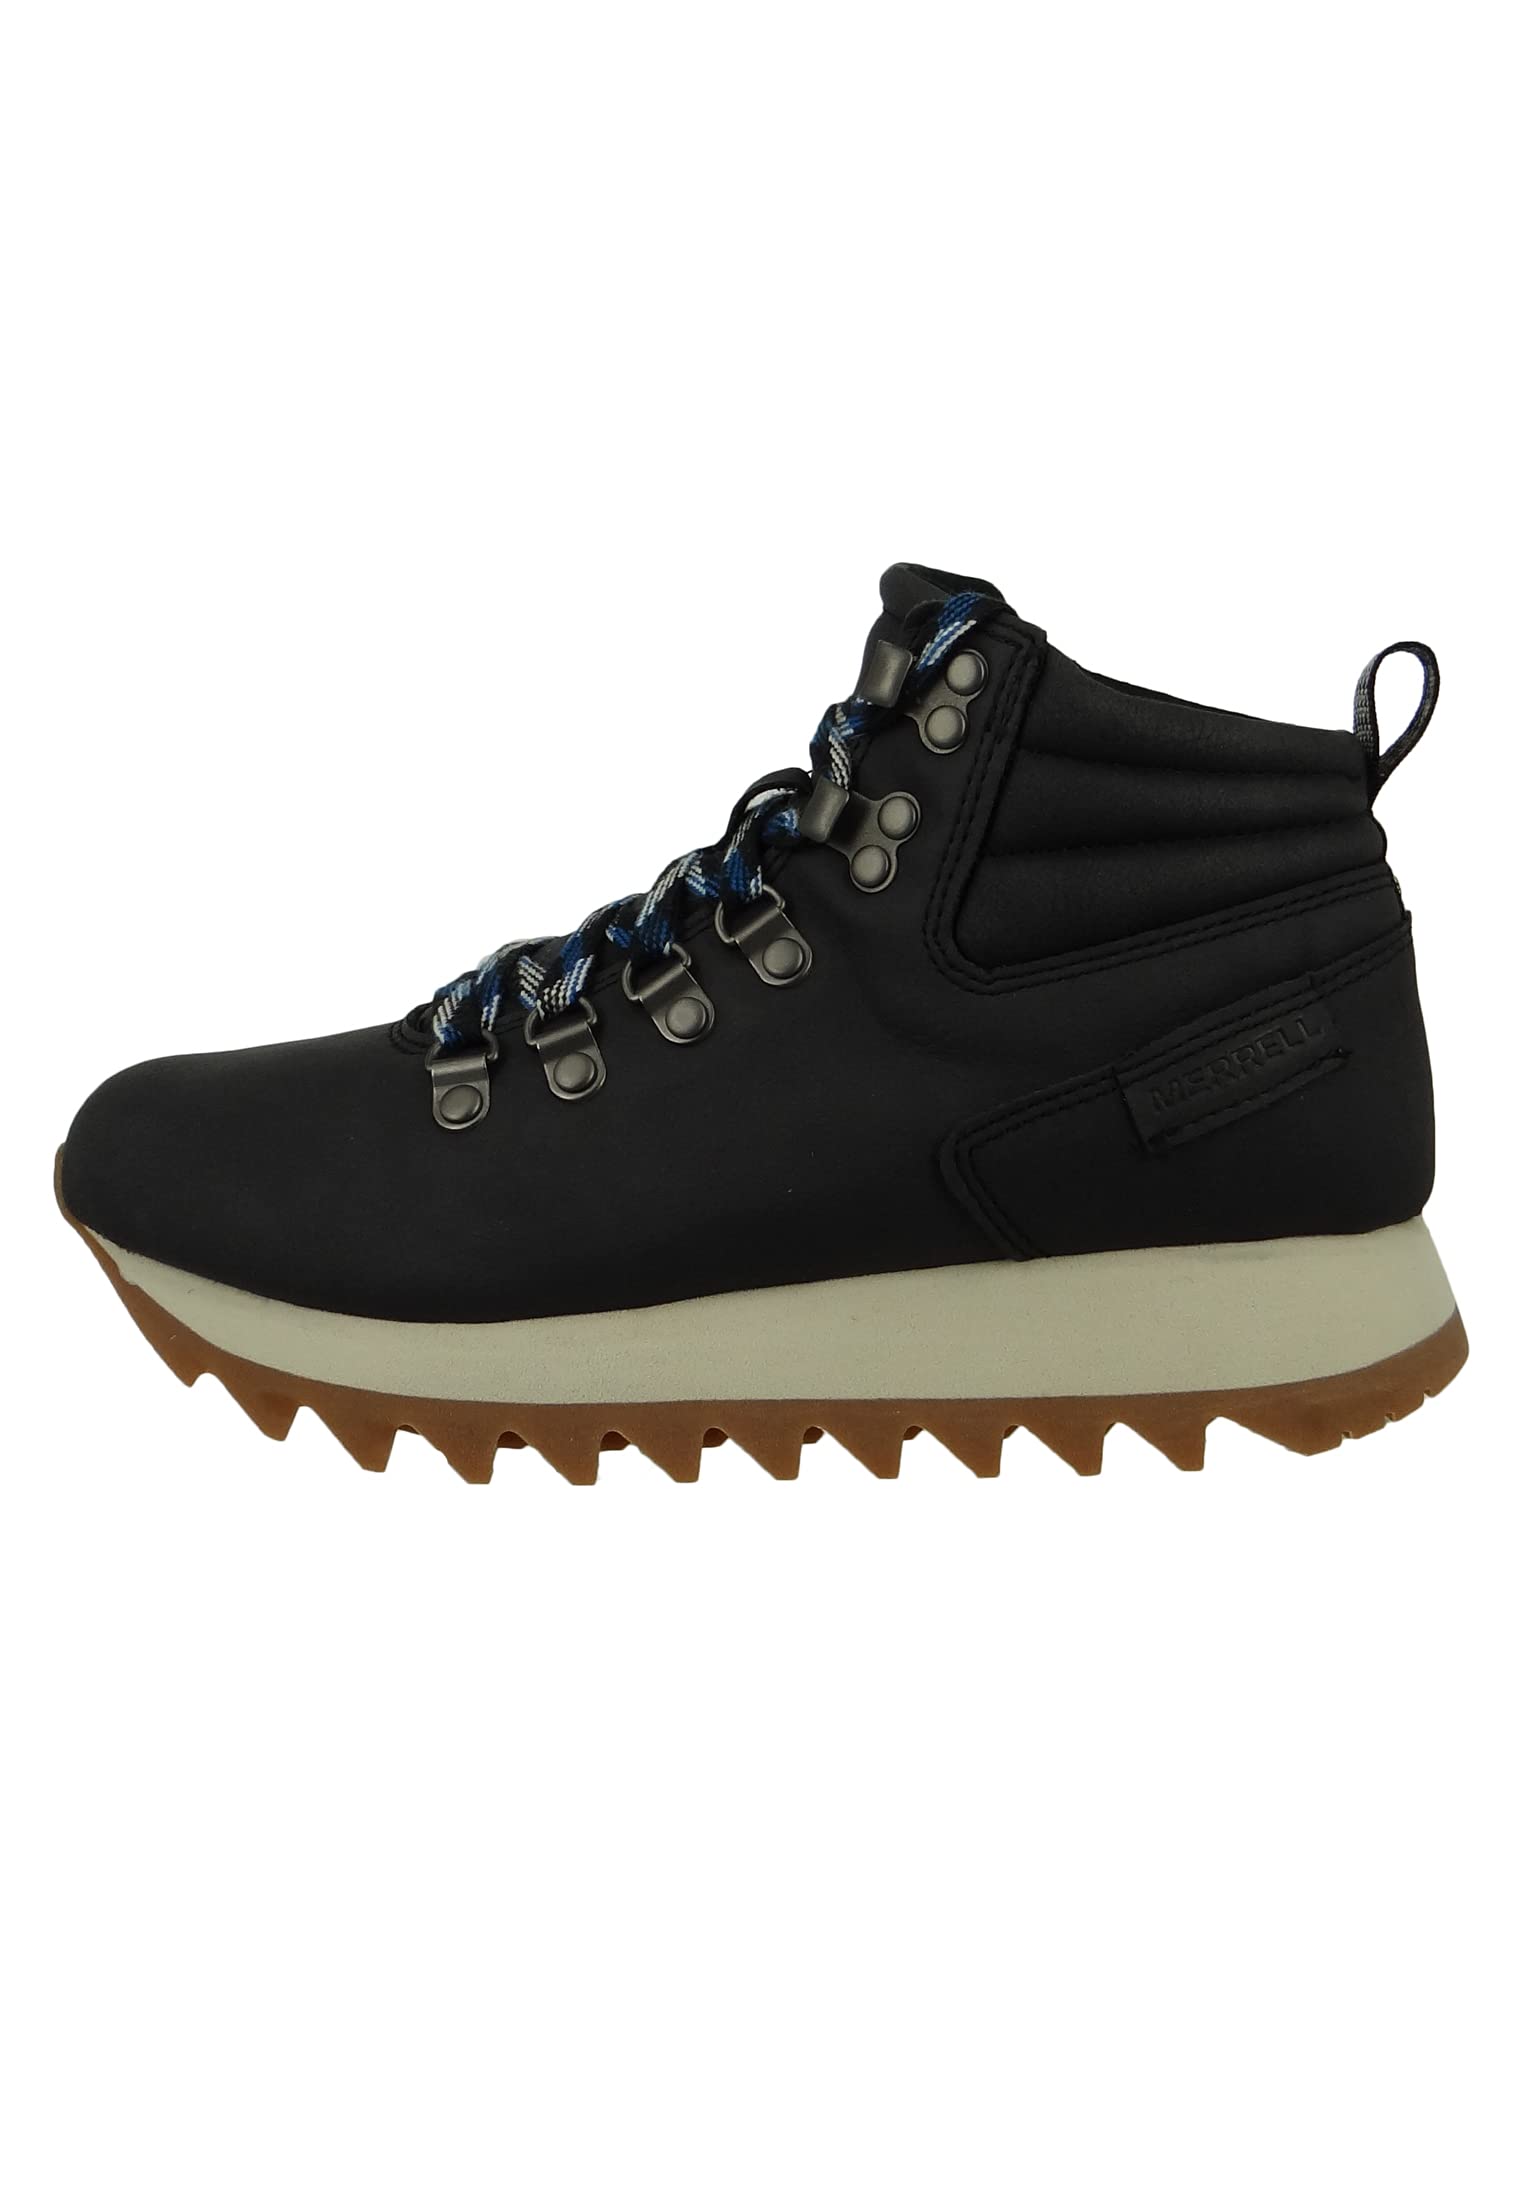 Merrell Women's Alpine Hiker Hiking Boots (Black, Various Sizes) $46.83 + Free Shipping